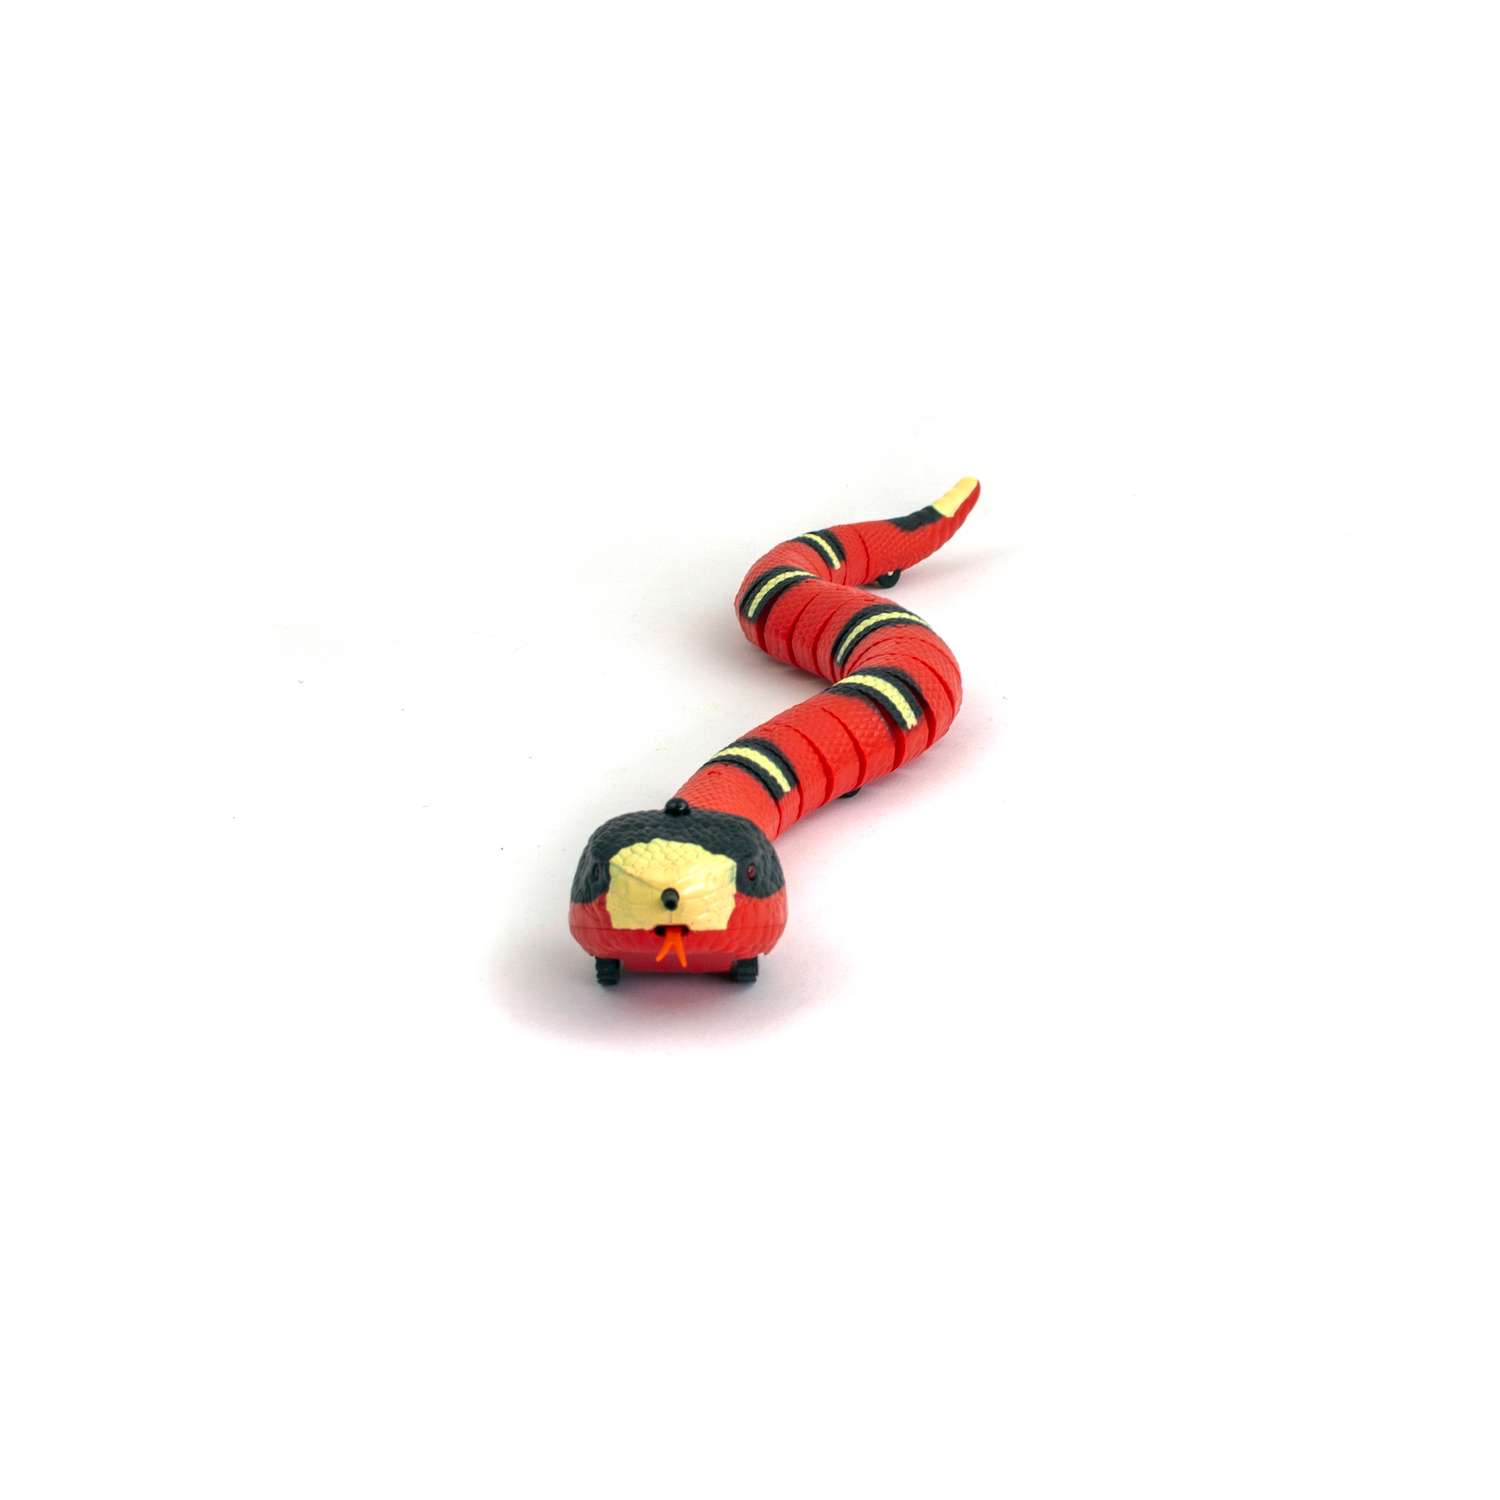 Игрушка змея ZF best fun toys 39 см обходит препятствия - фото 2